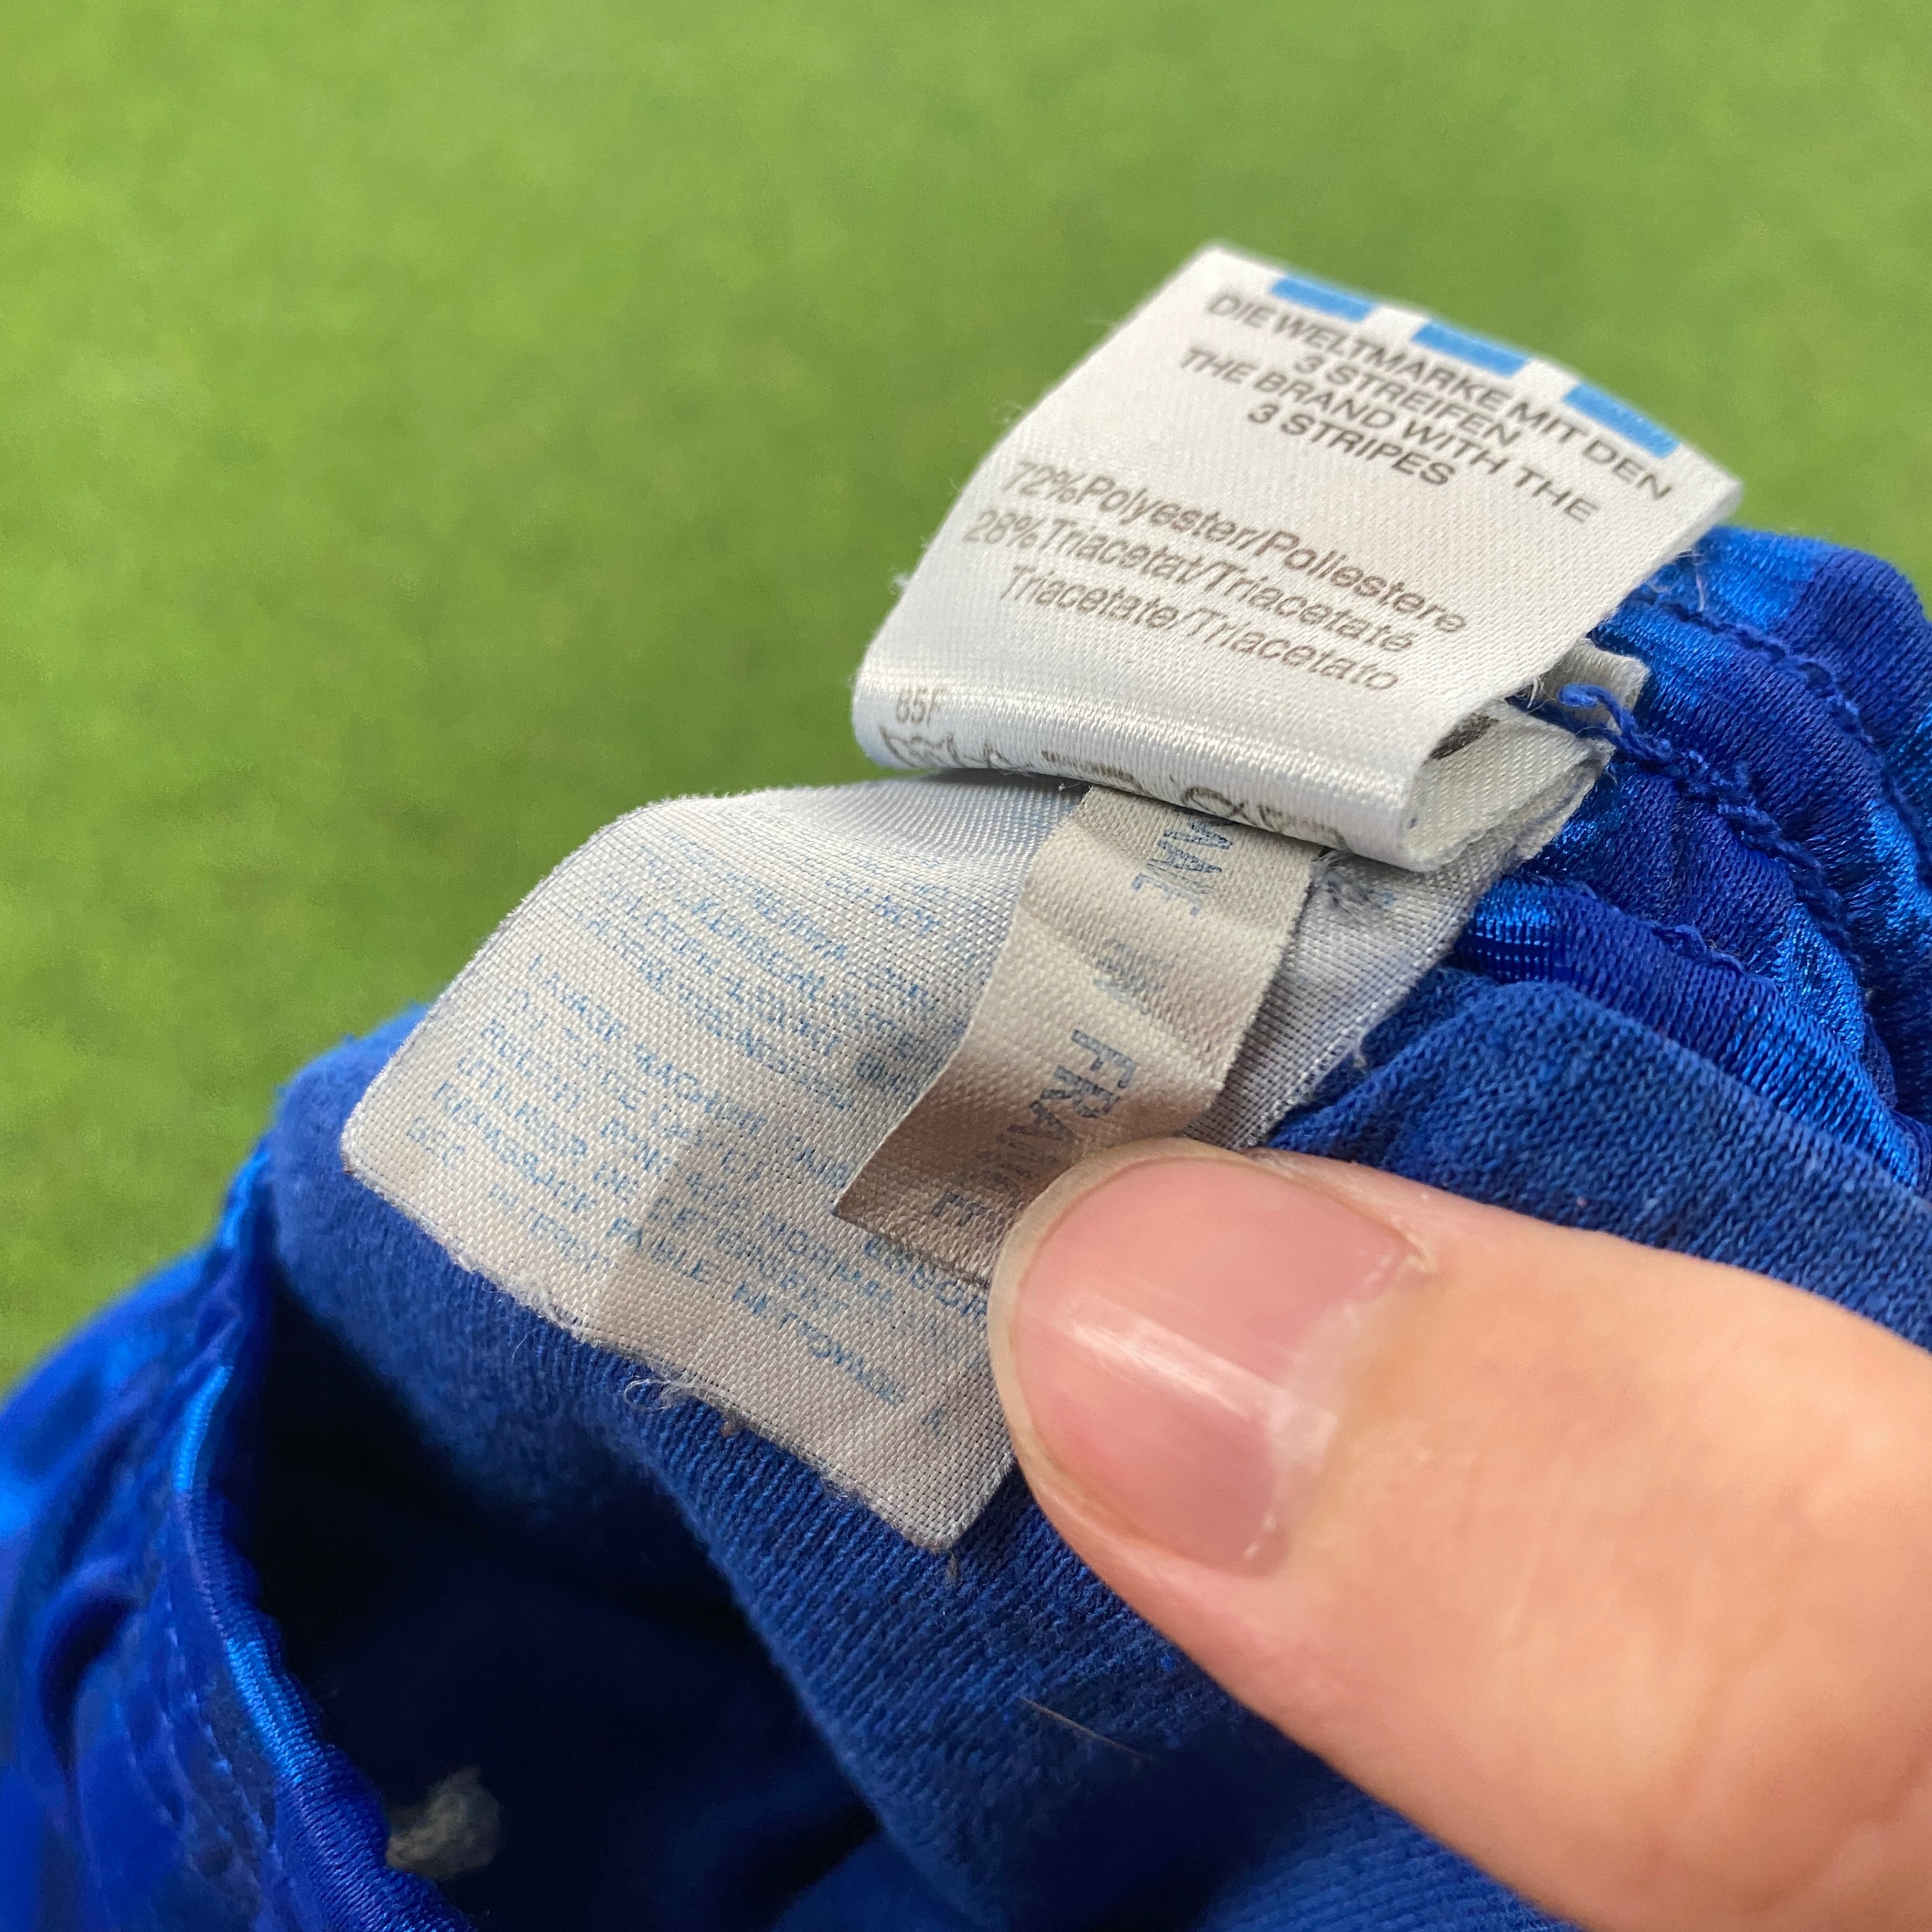 Retro Adidas Nylon Sprinter Shorts Blue XL